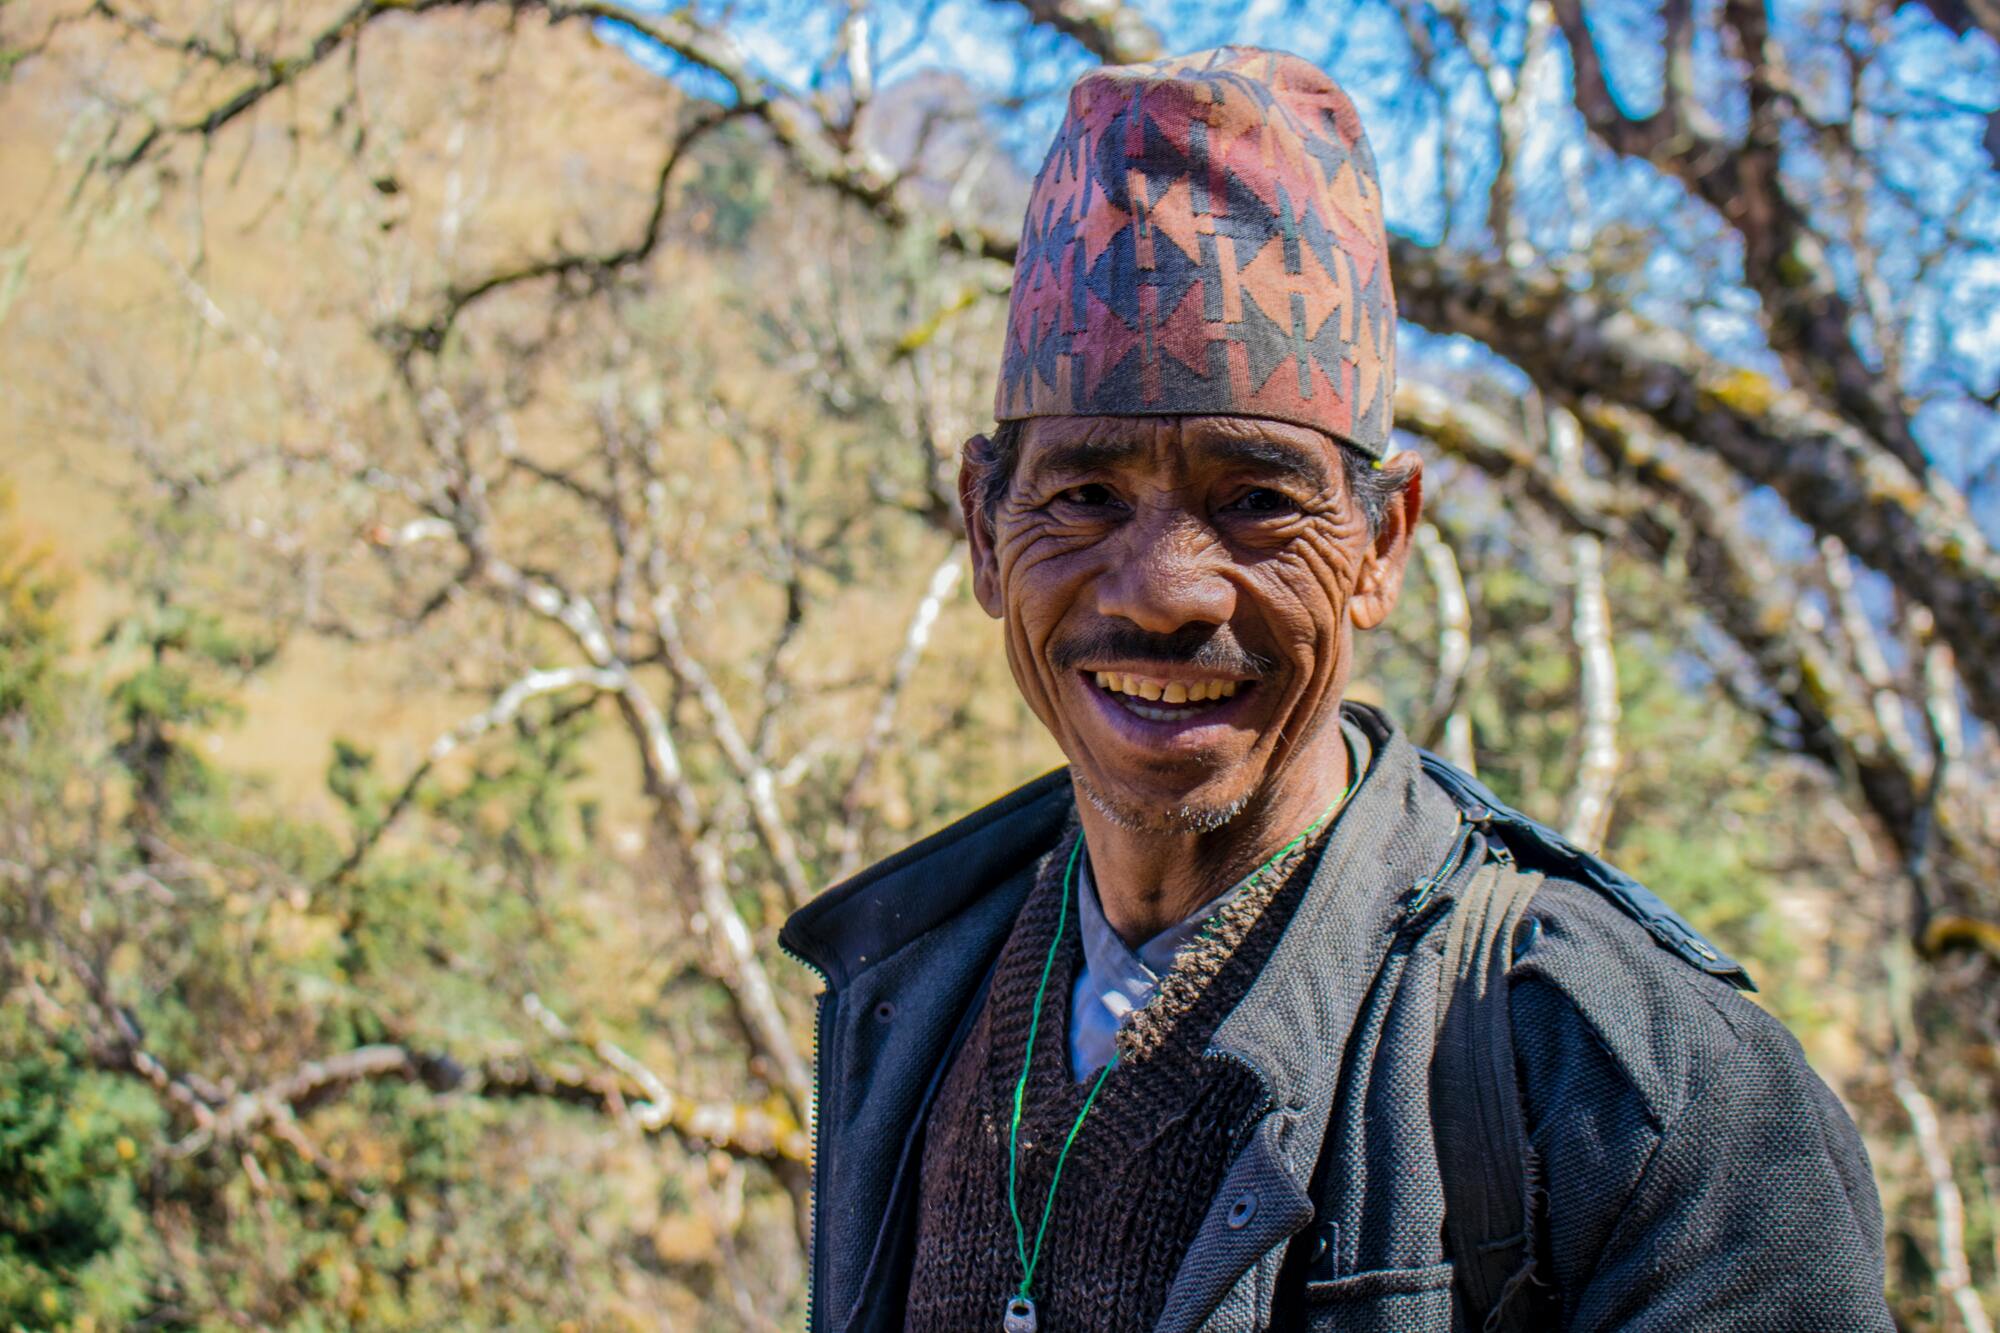 Man wearing a topi, Nepal - By Mountain People